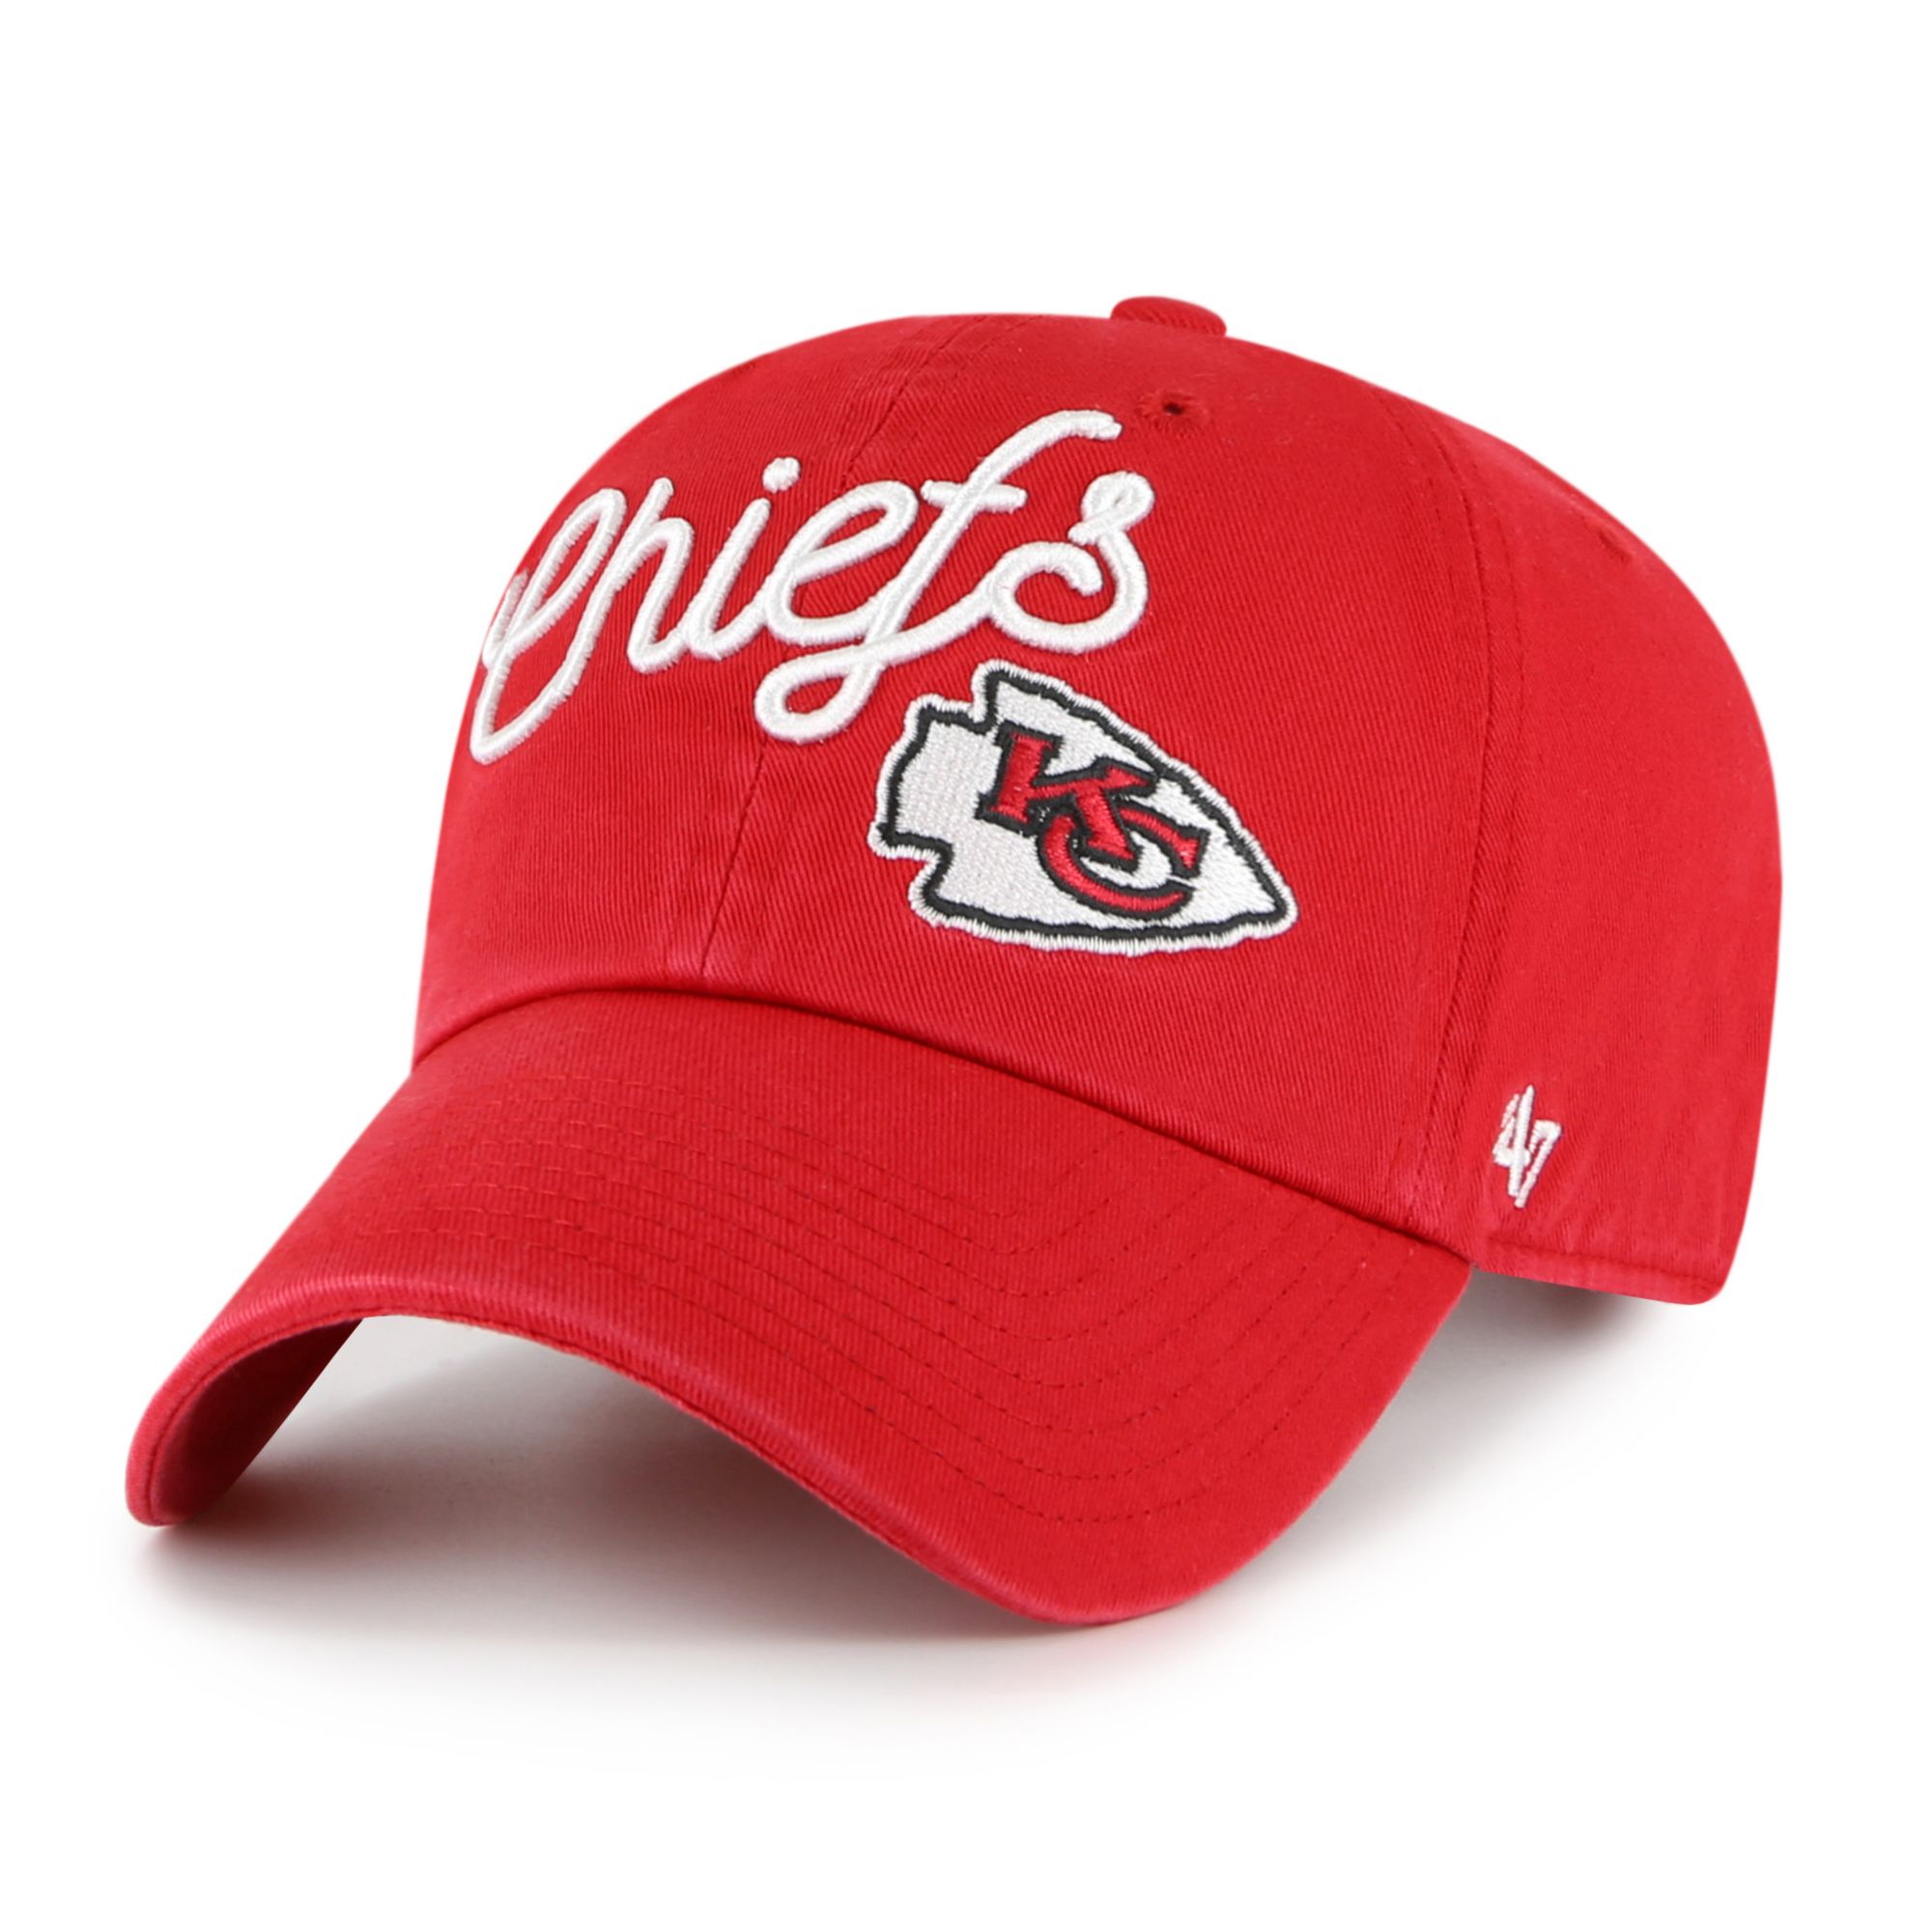 47 Men's Kansas City Chiefs MVP Black Adjustable Hat